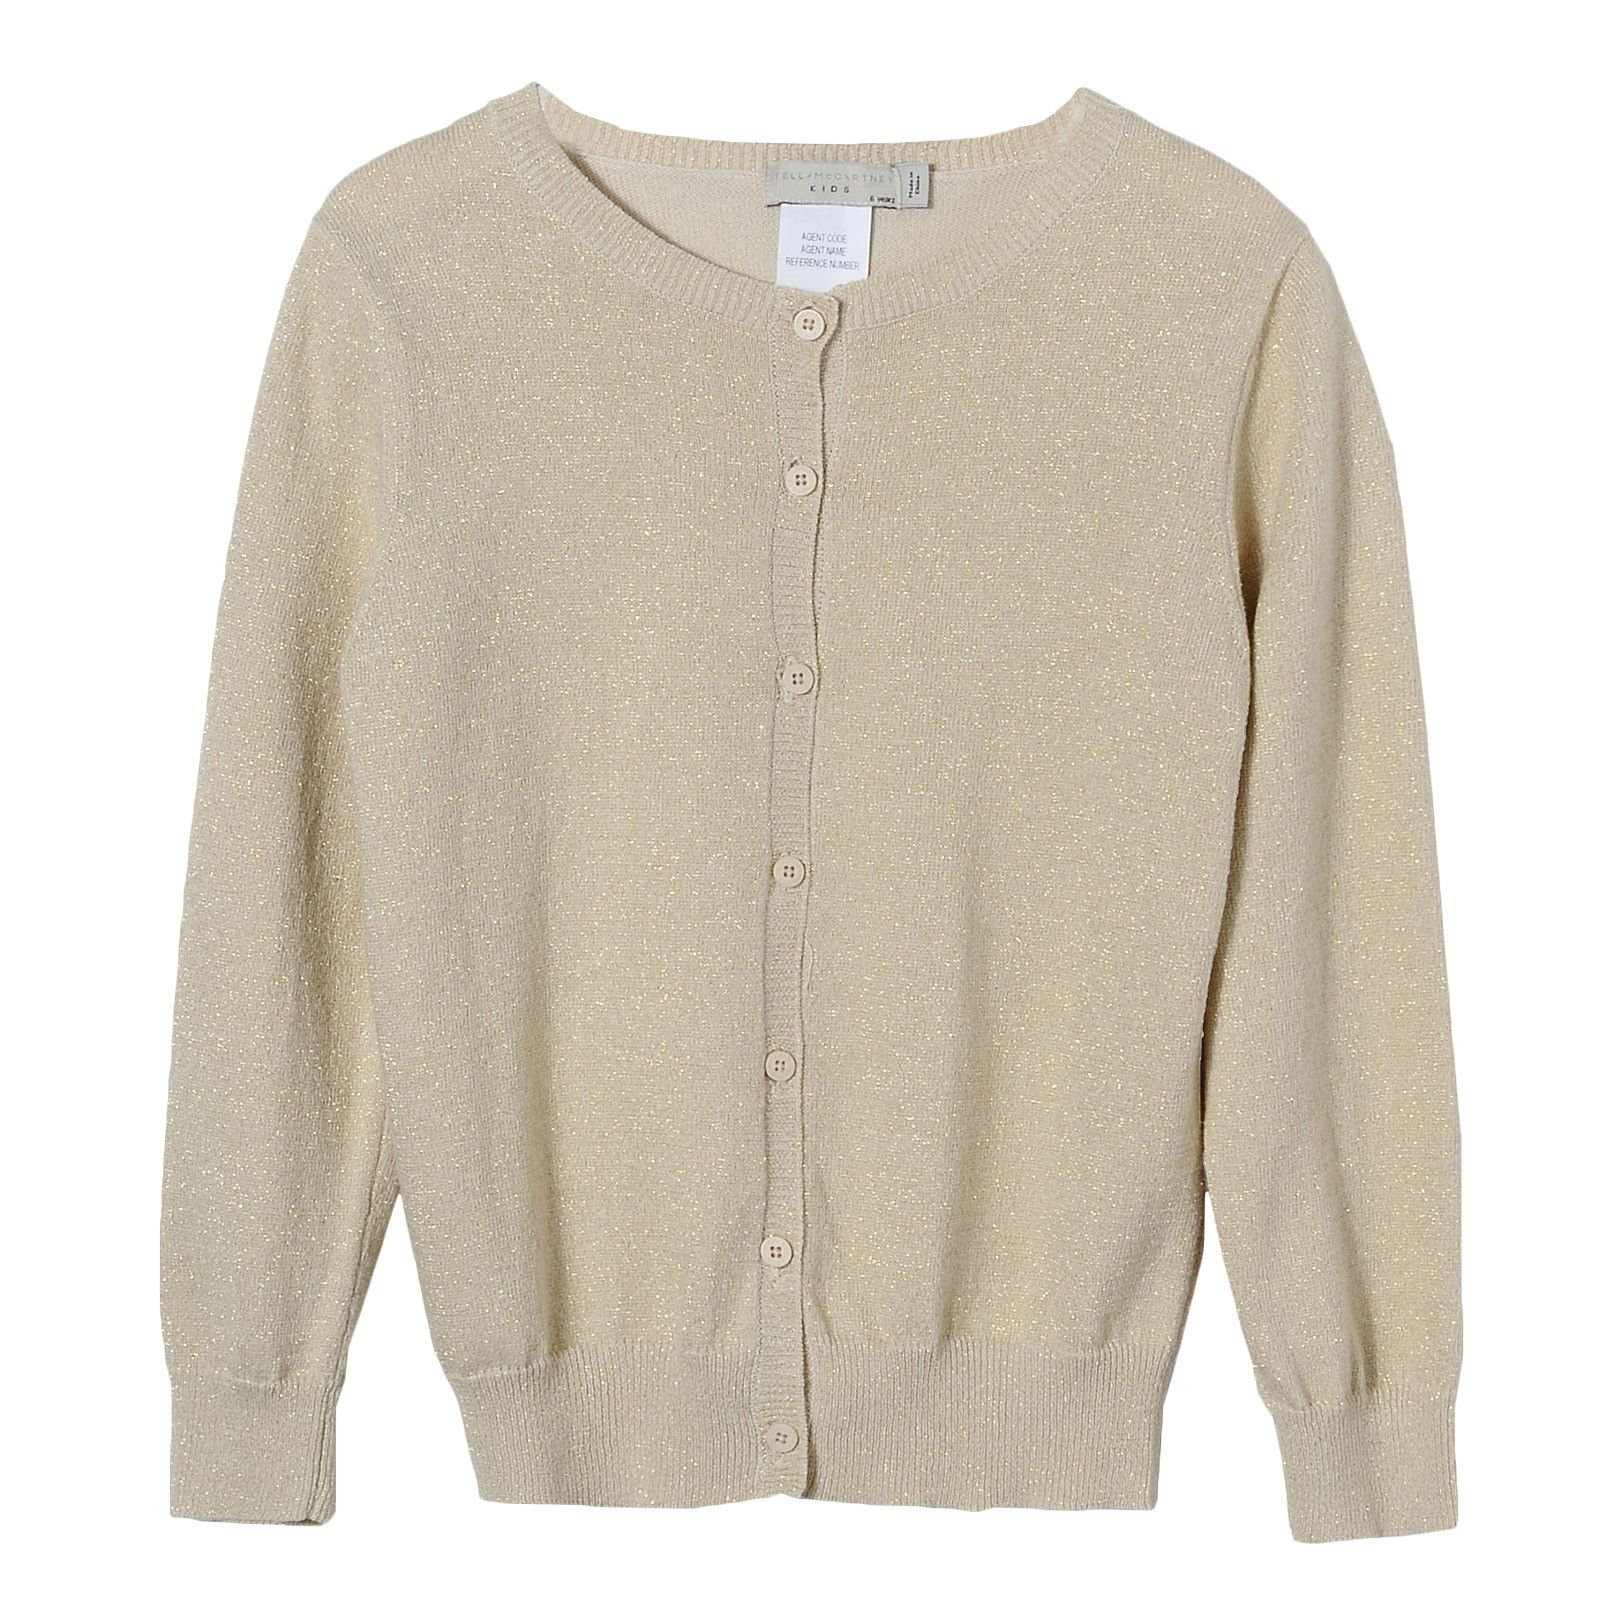 Girls Gold Cotton Knitted Cardigan - CÉMAROSE | Children's Fashion Store - 1